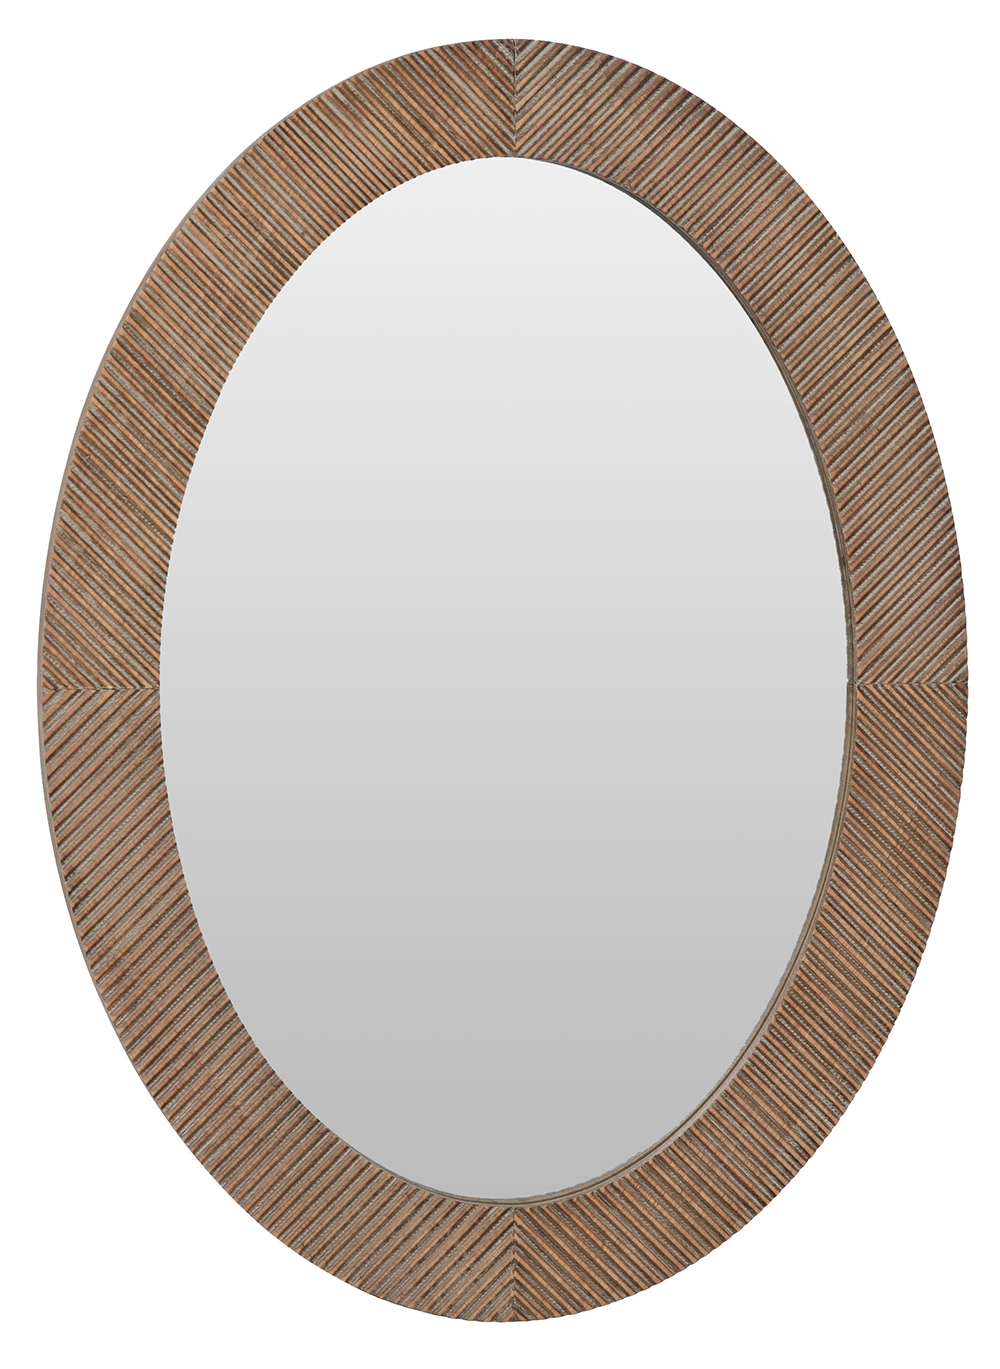 Edler Wandspiegel oval Holz Braun 76cm ovaler Spiegel Rahmen